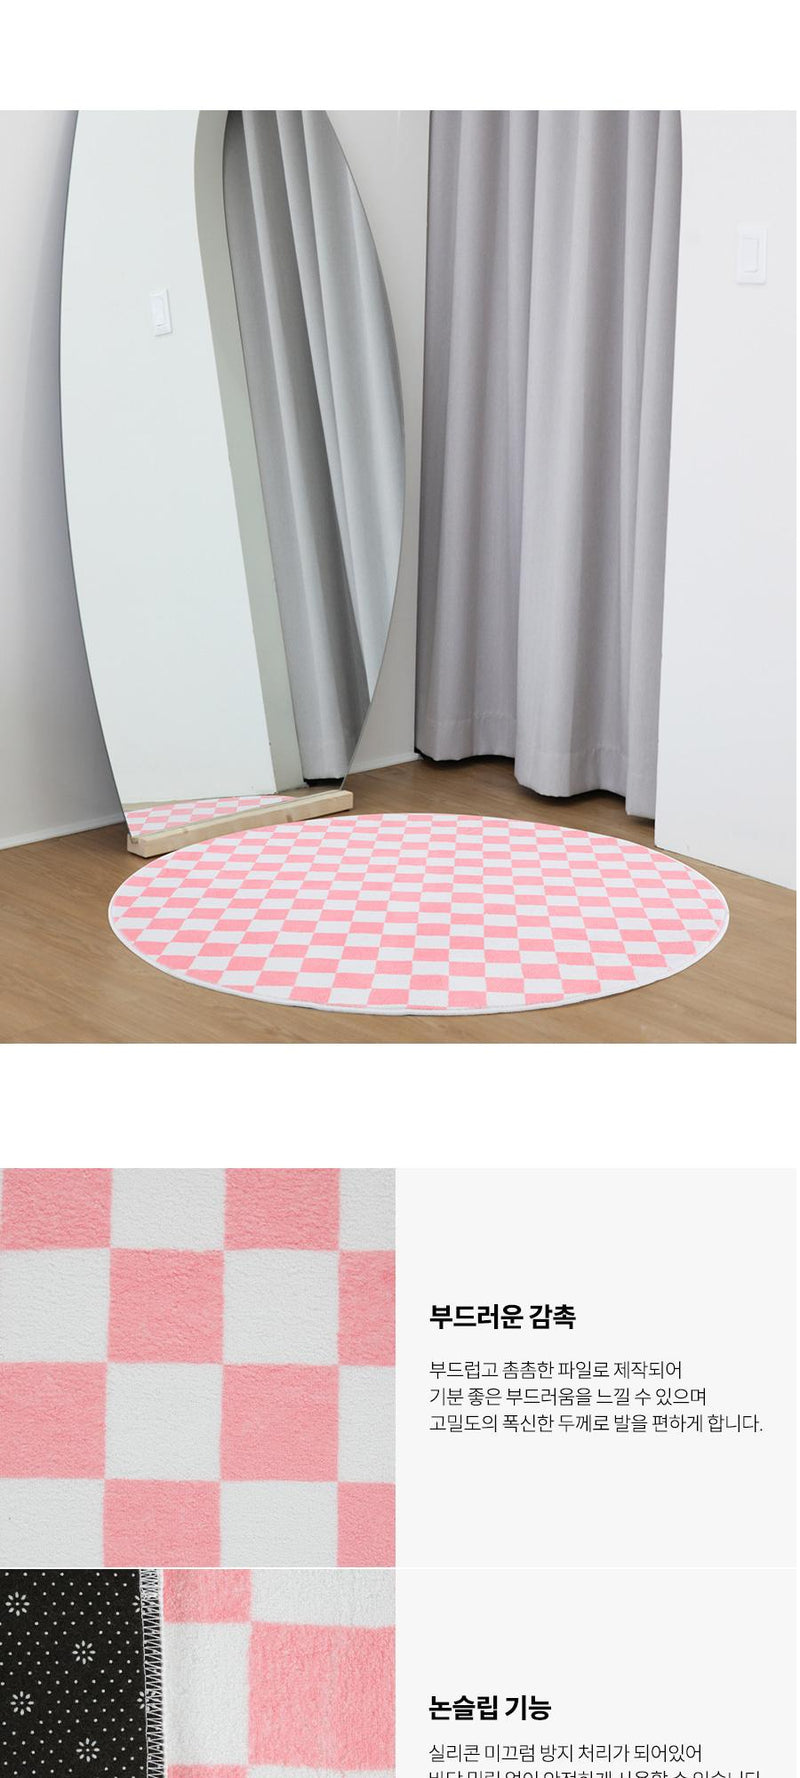 Vivid Pink Checkerboard インテリア 円形ラグ